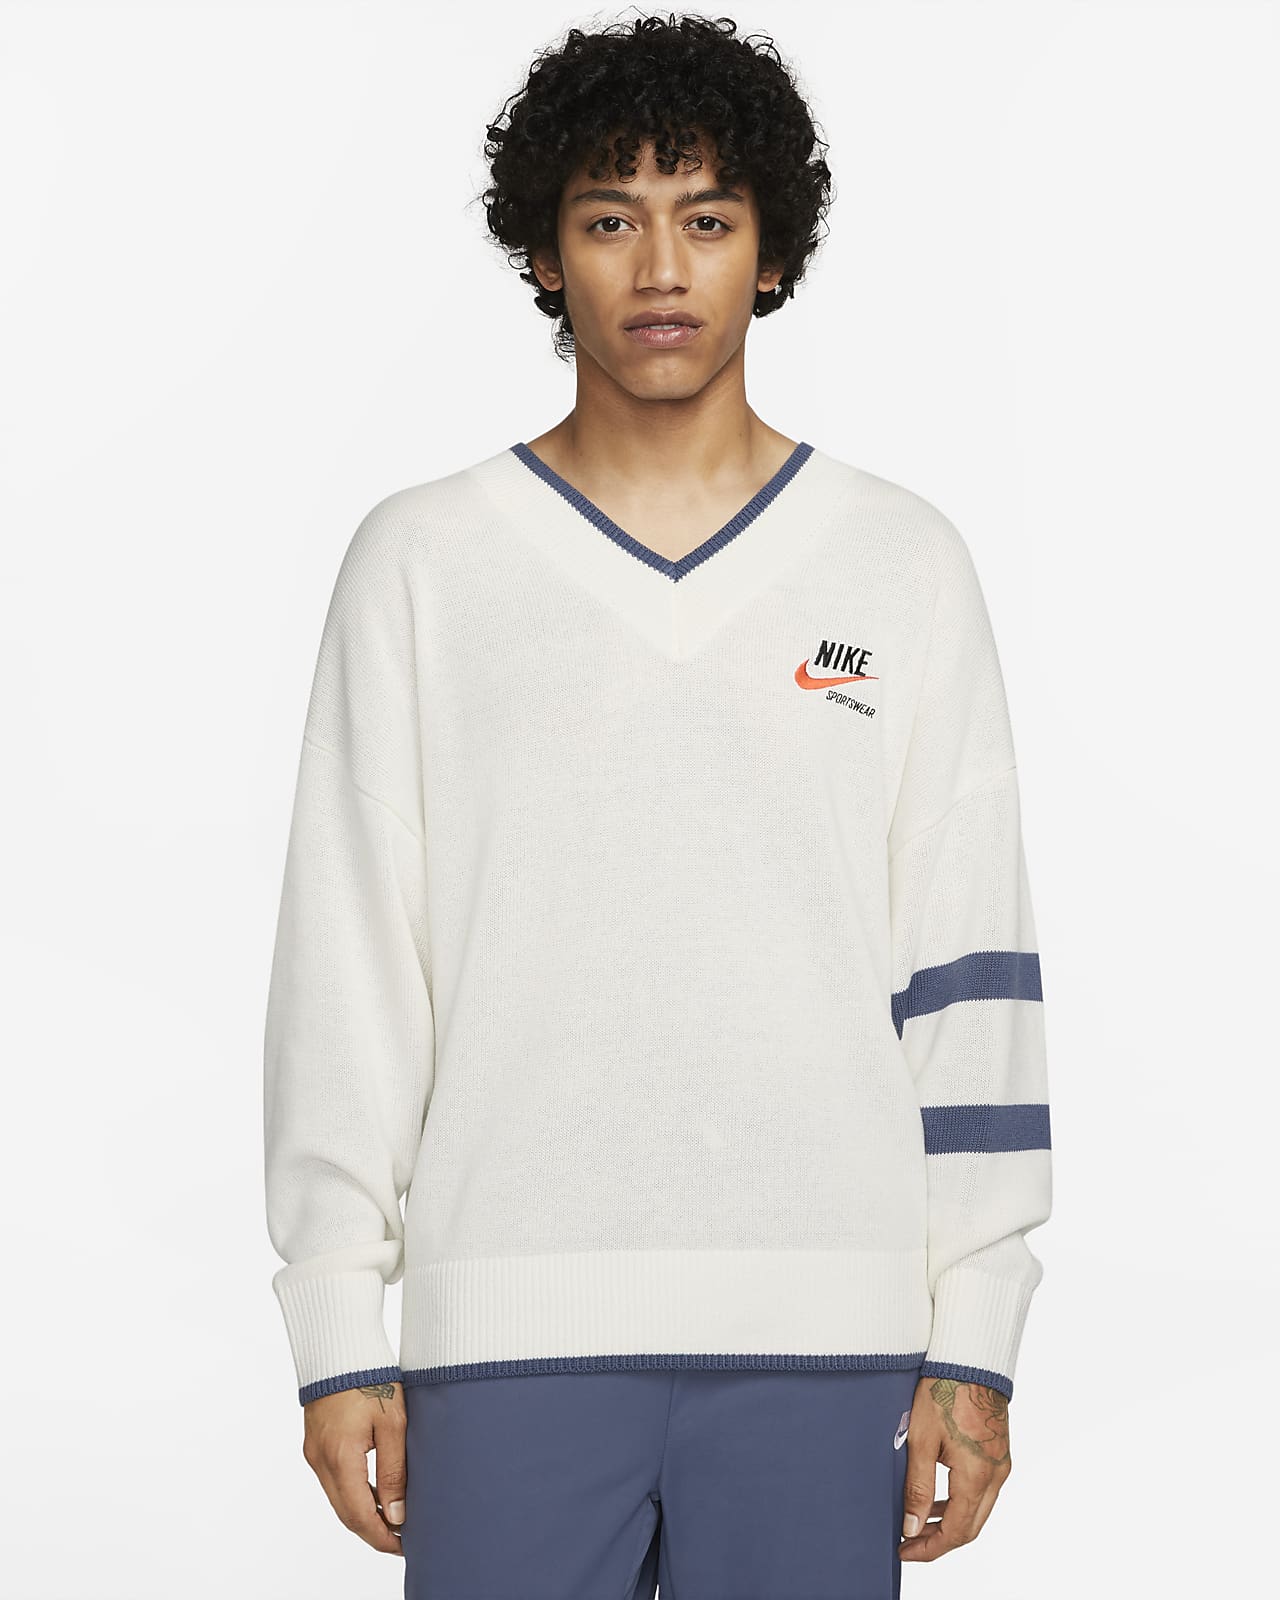 Nike men’s Sweater